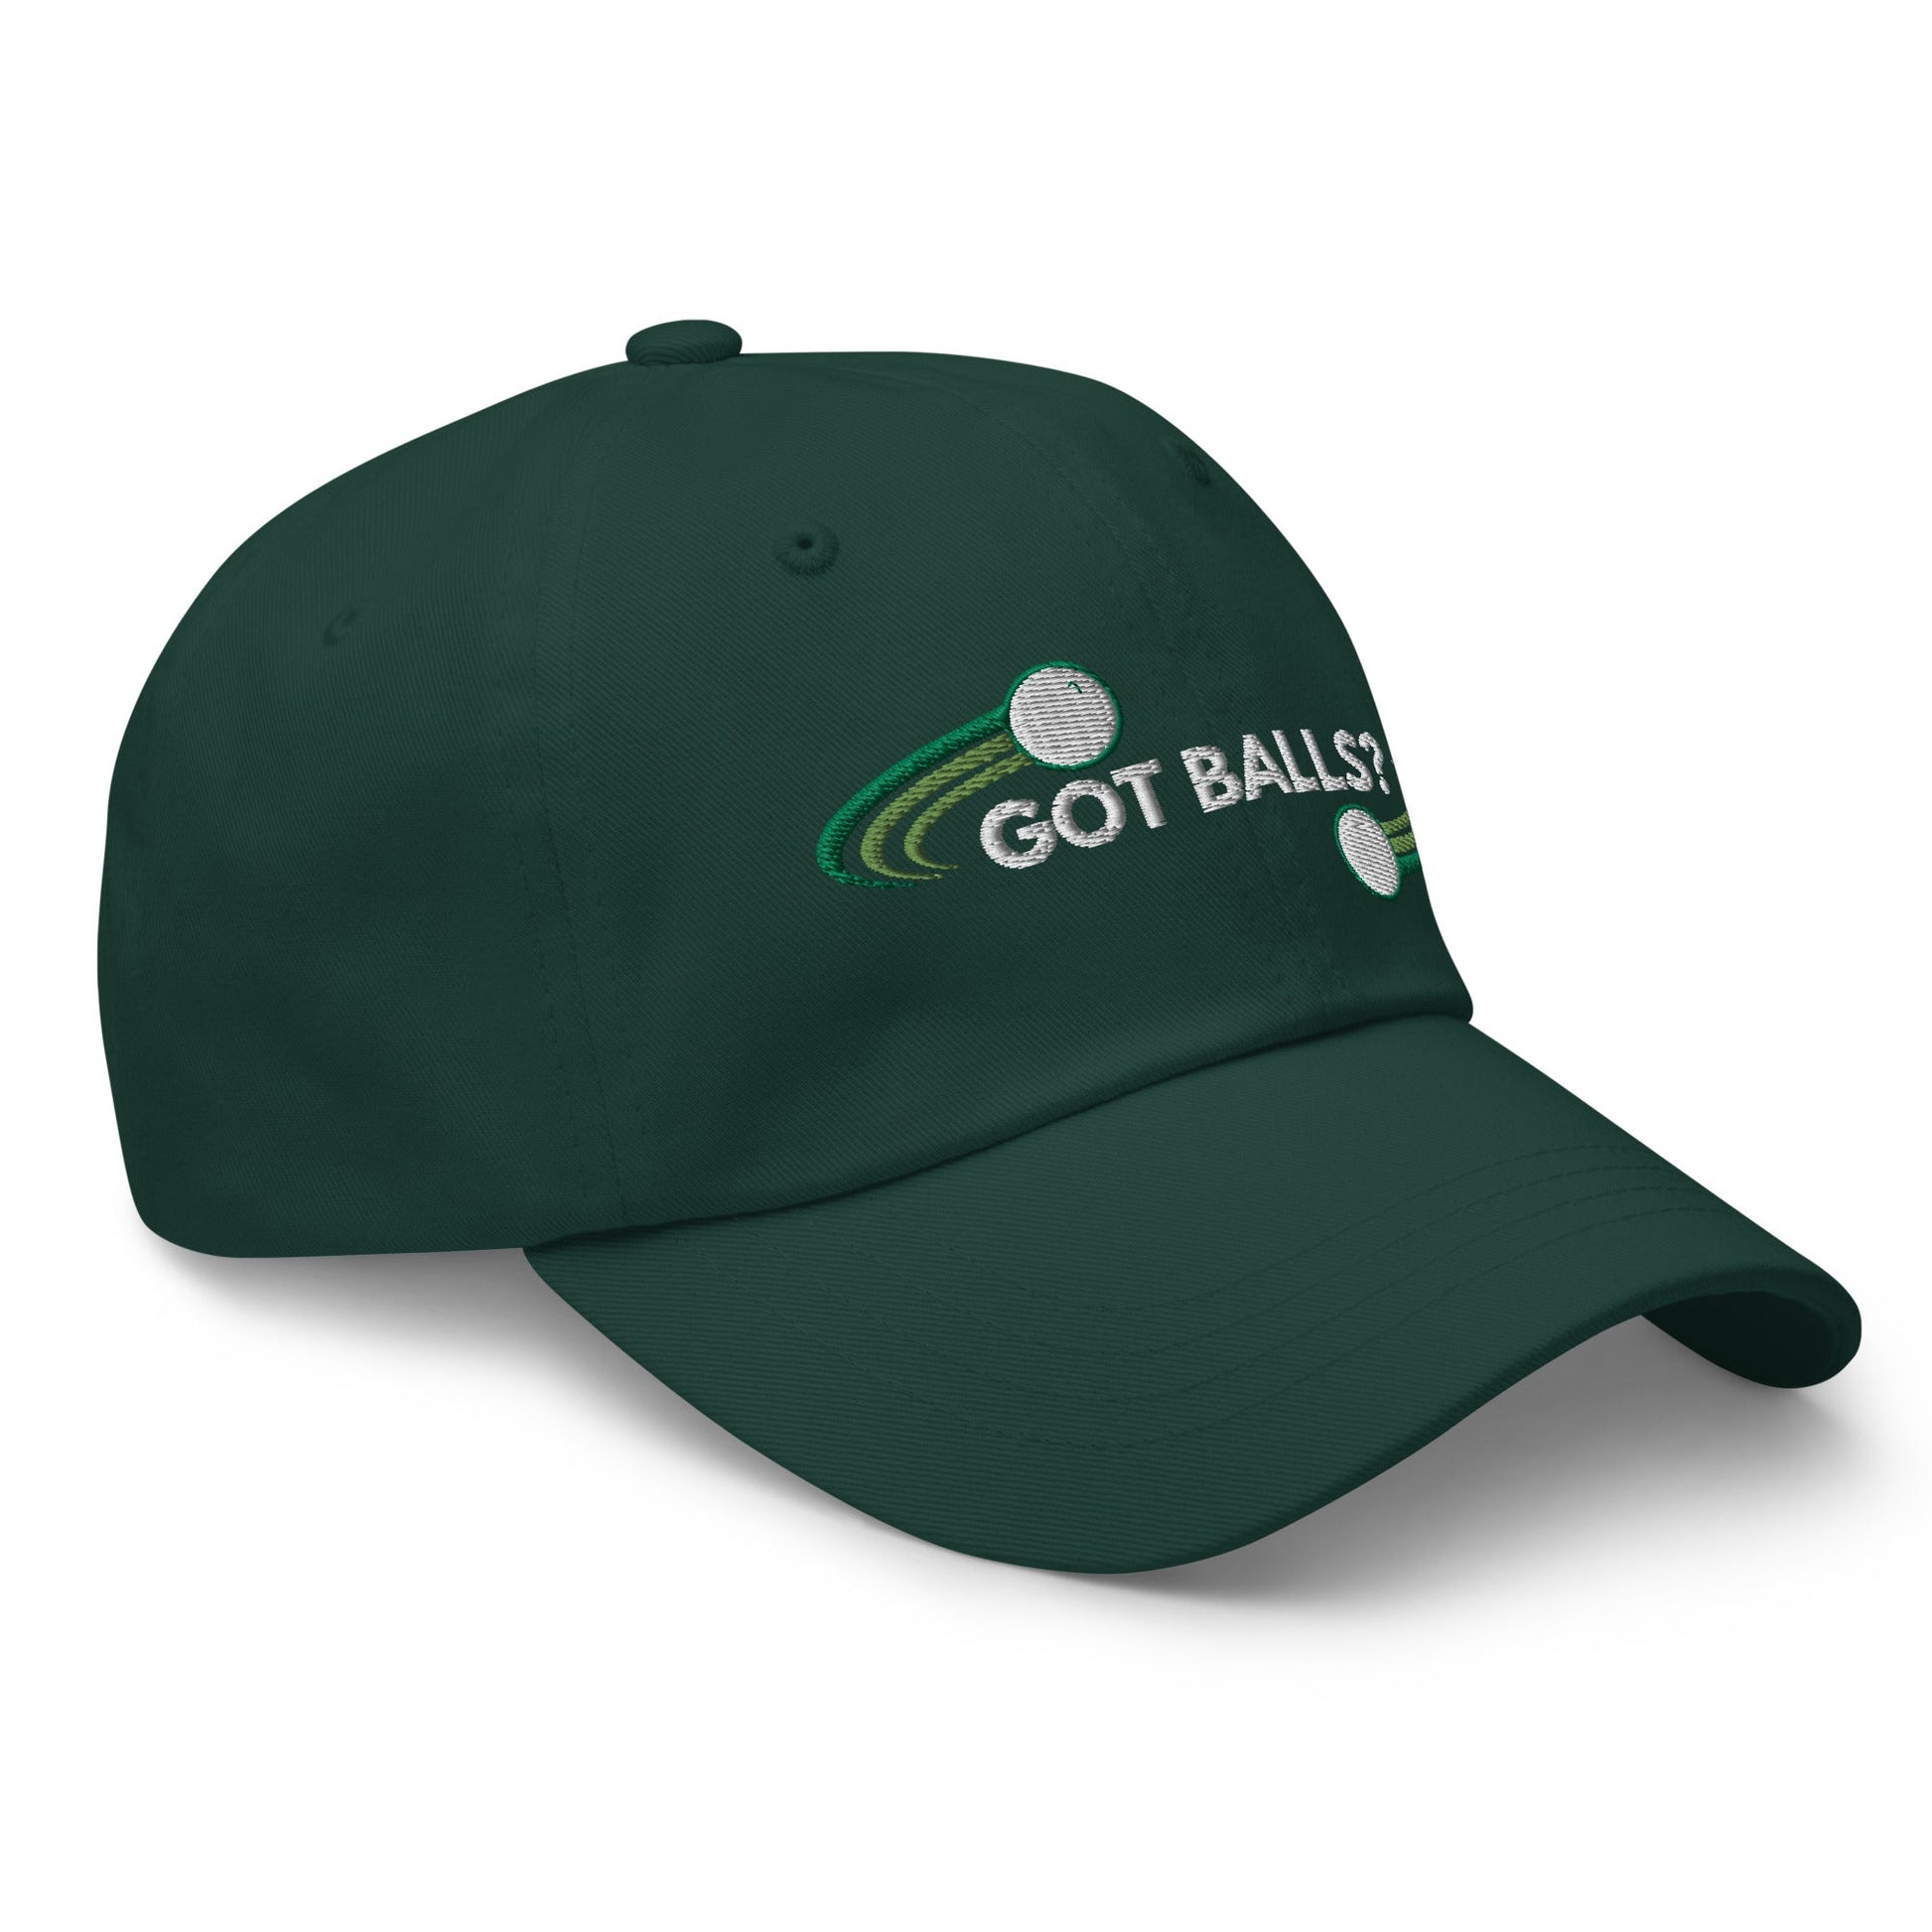 Funny Golfer Gifts  Dad Cap Spruce Got Balls Cap